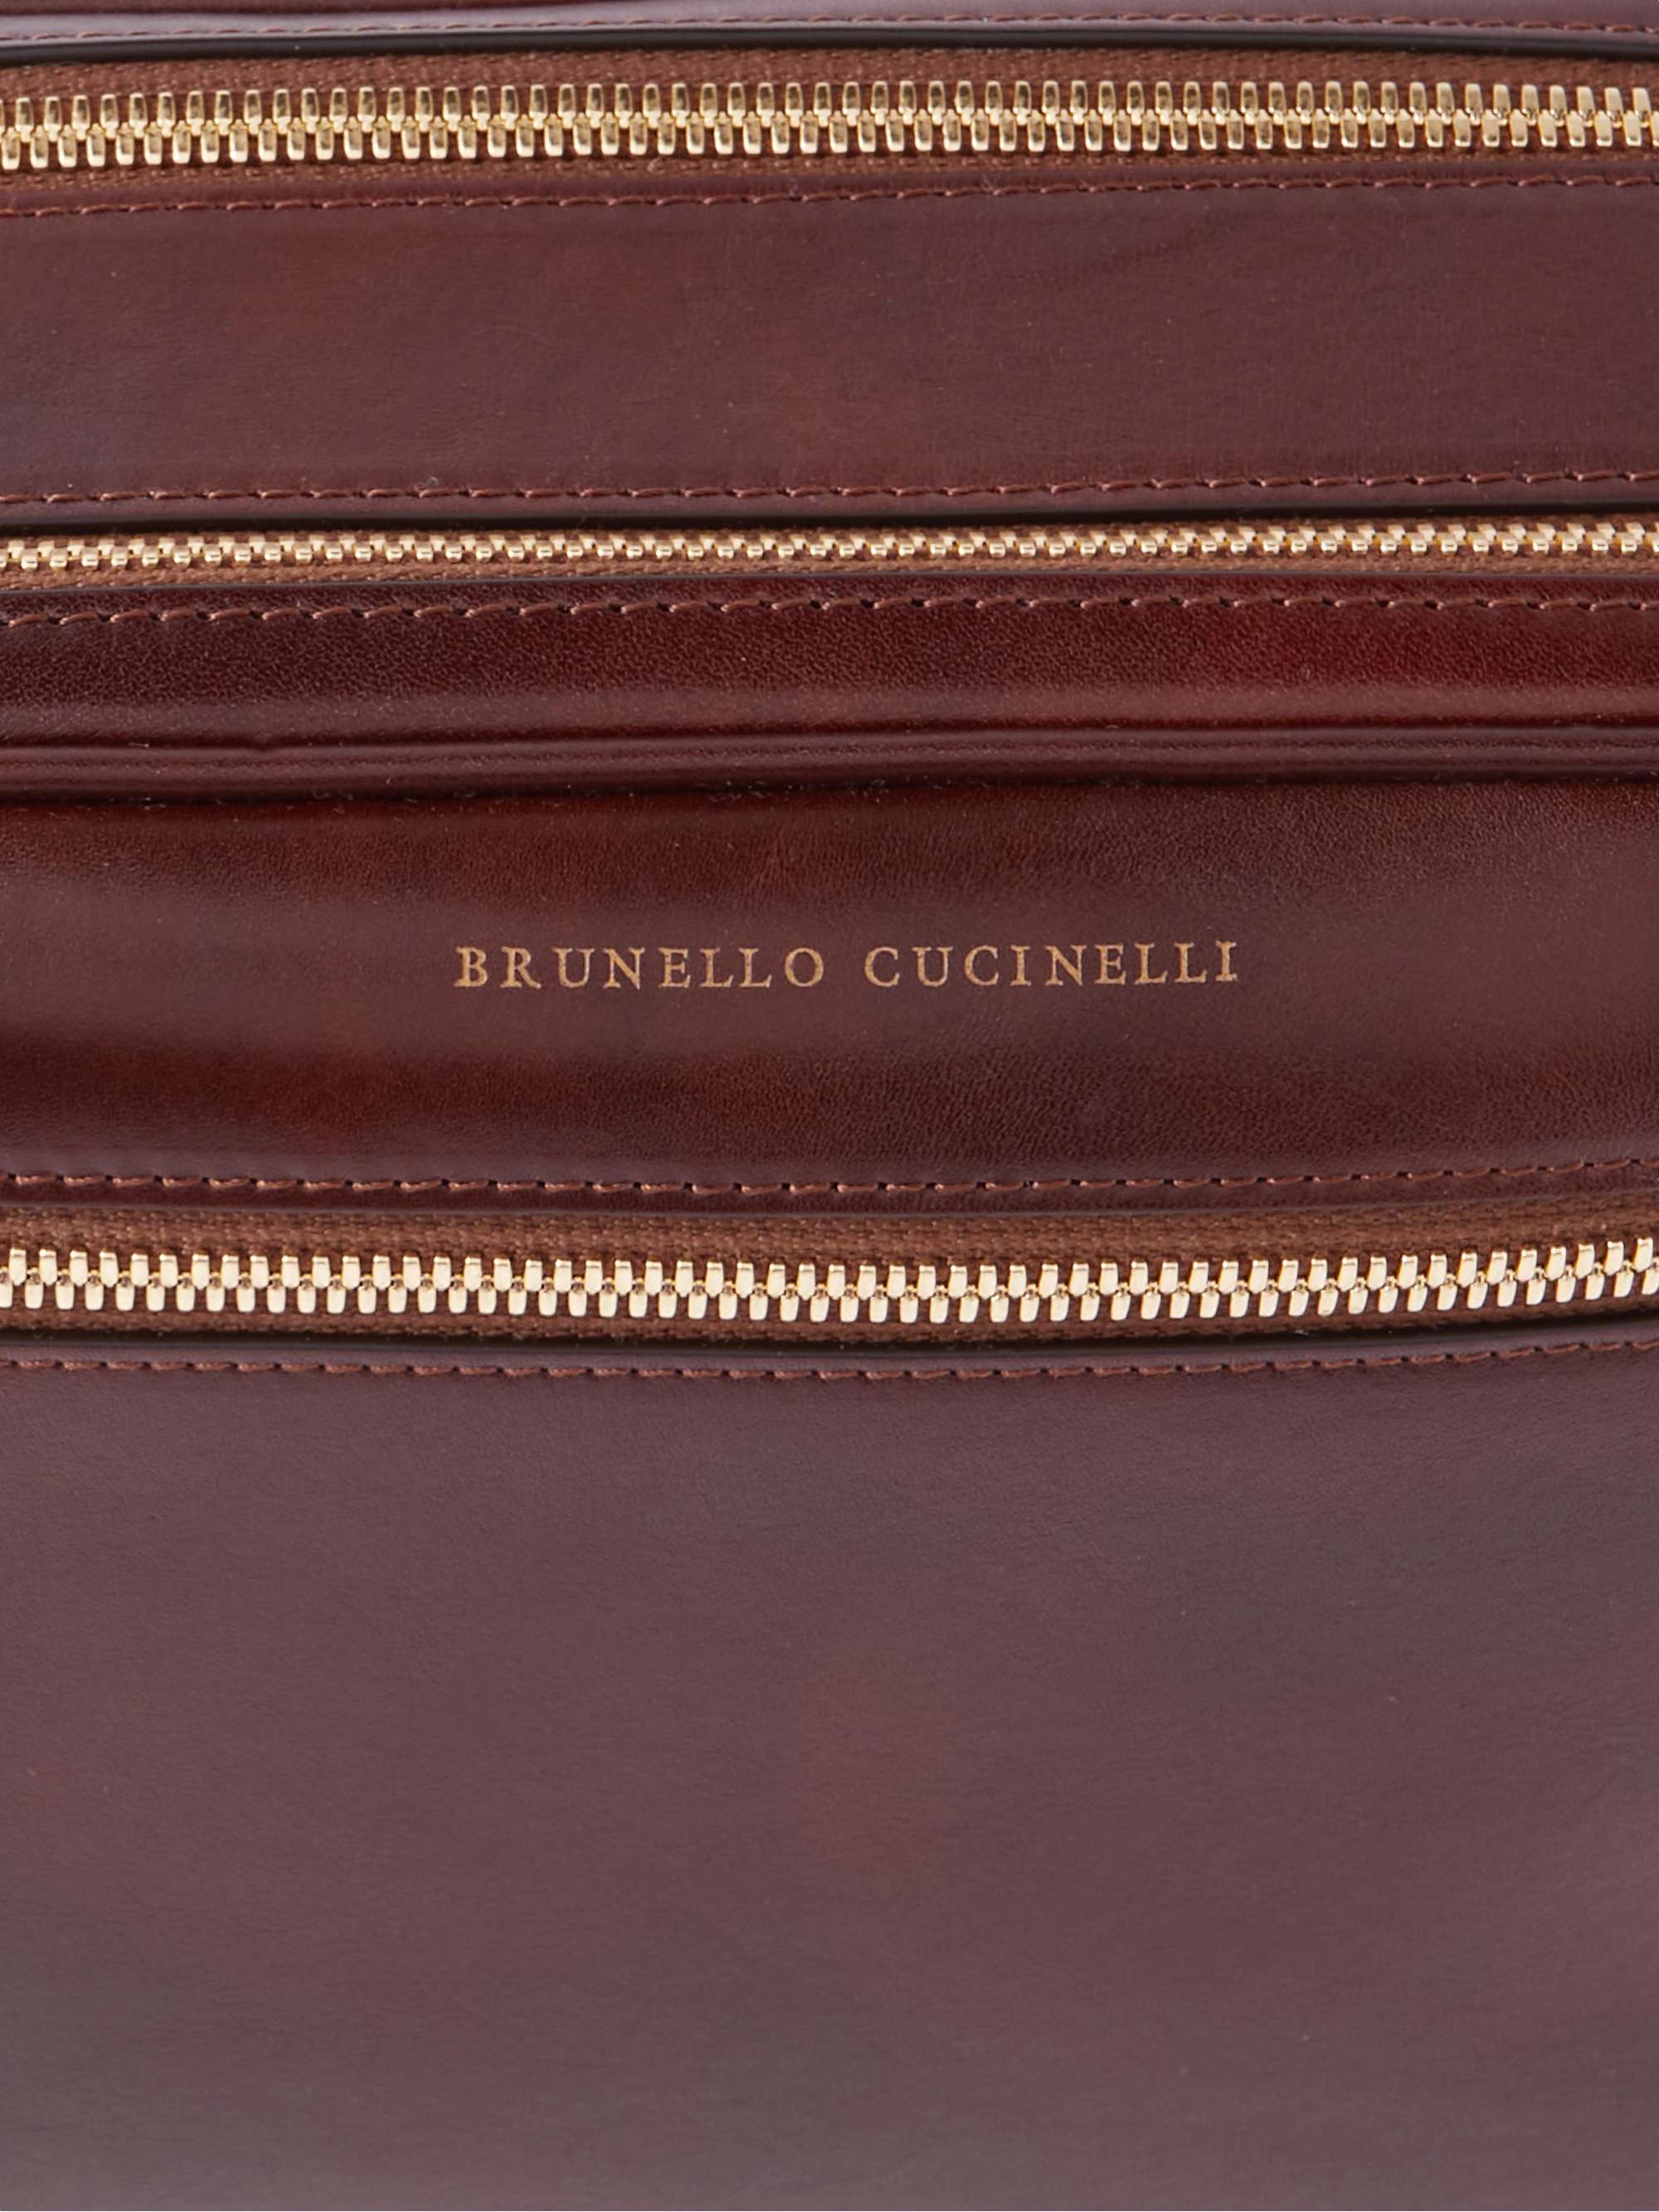 BRUNELLO CUCINELLI Leather Wash Bag